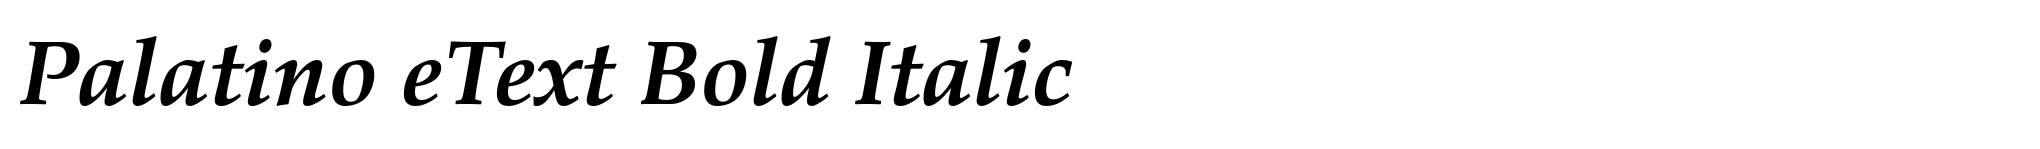 Palatino eText Bold Italic image